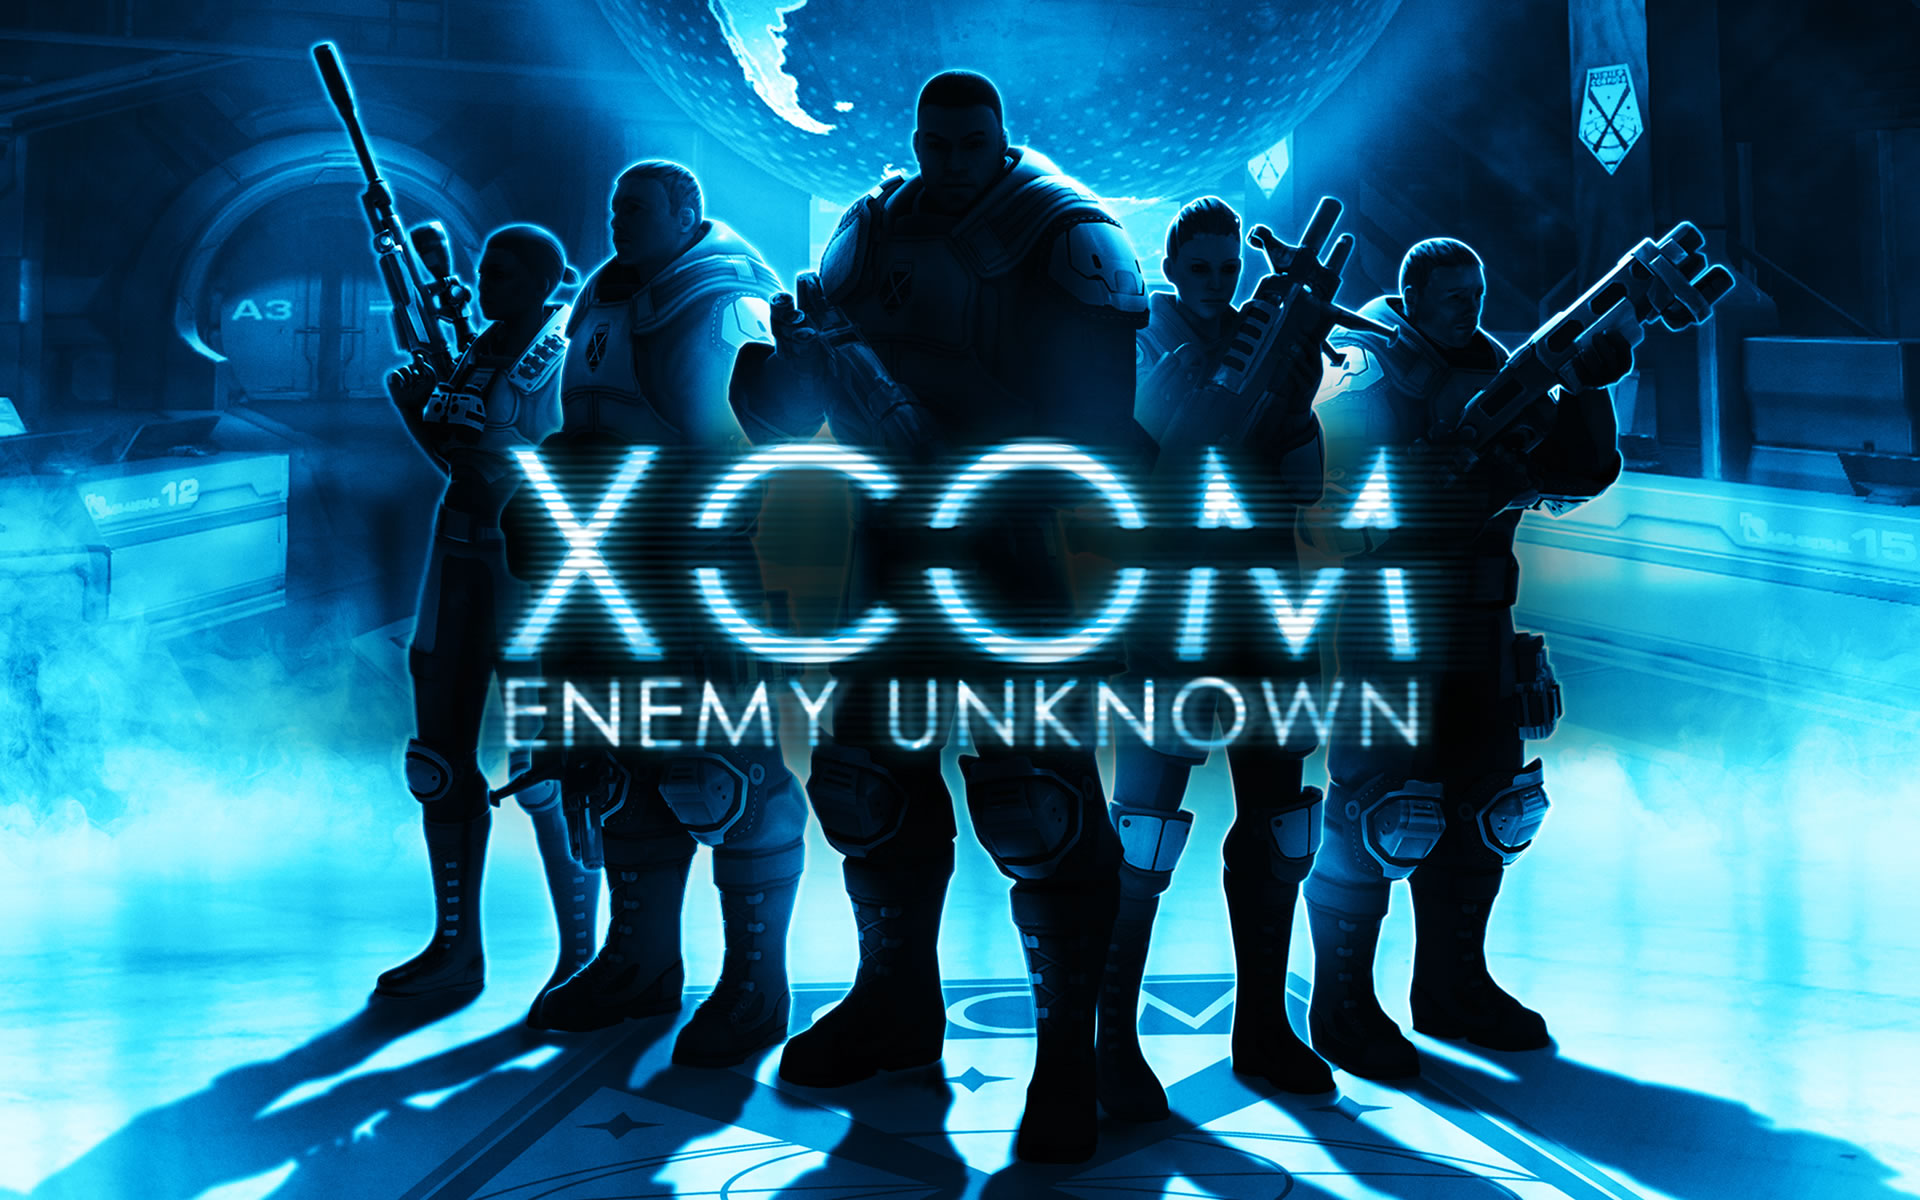 xcom-enemy-unknown-download-free